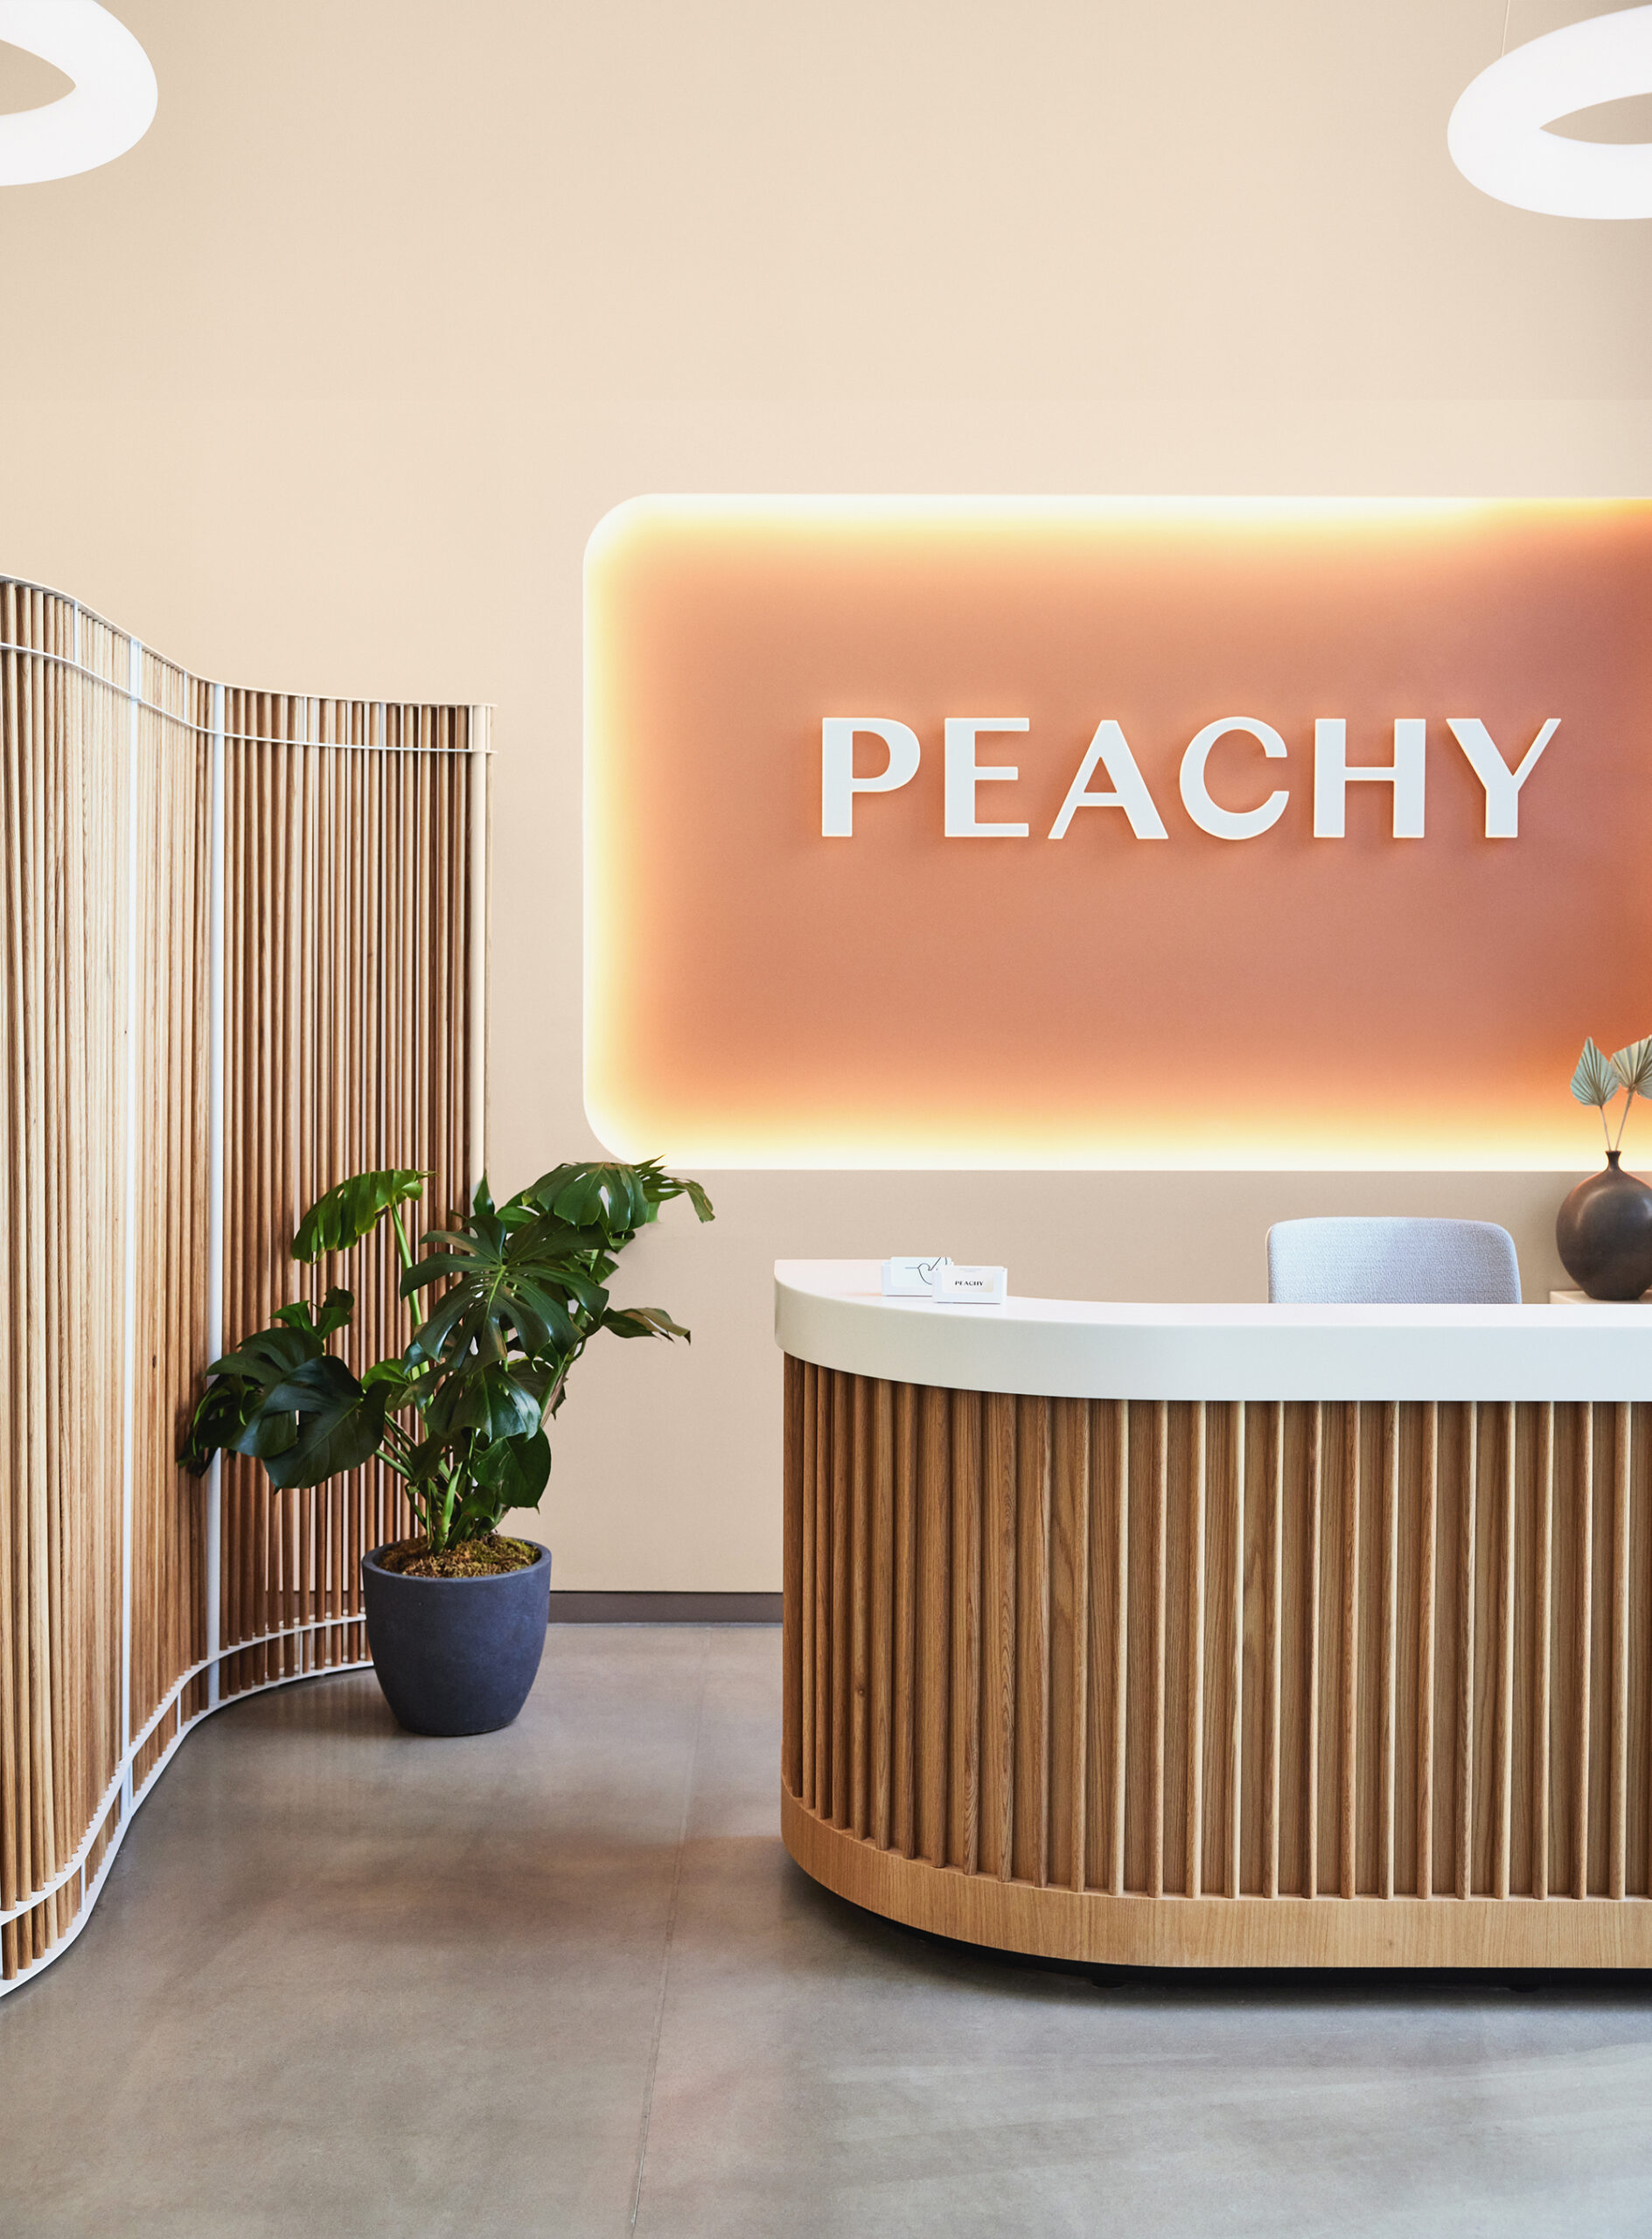 Peachy-Image-Portrait-MW